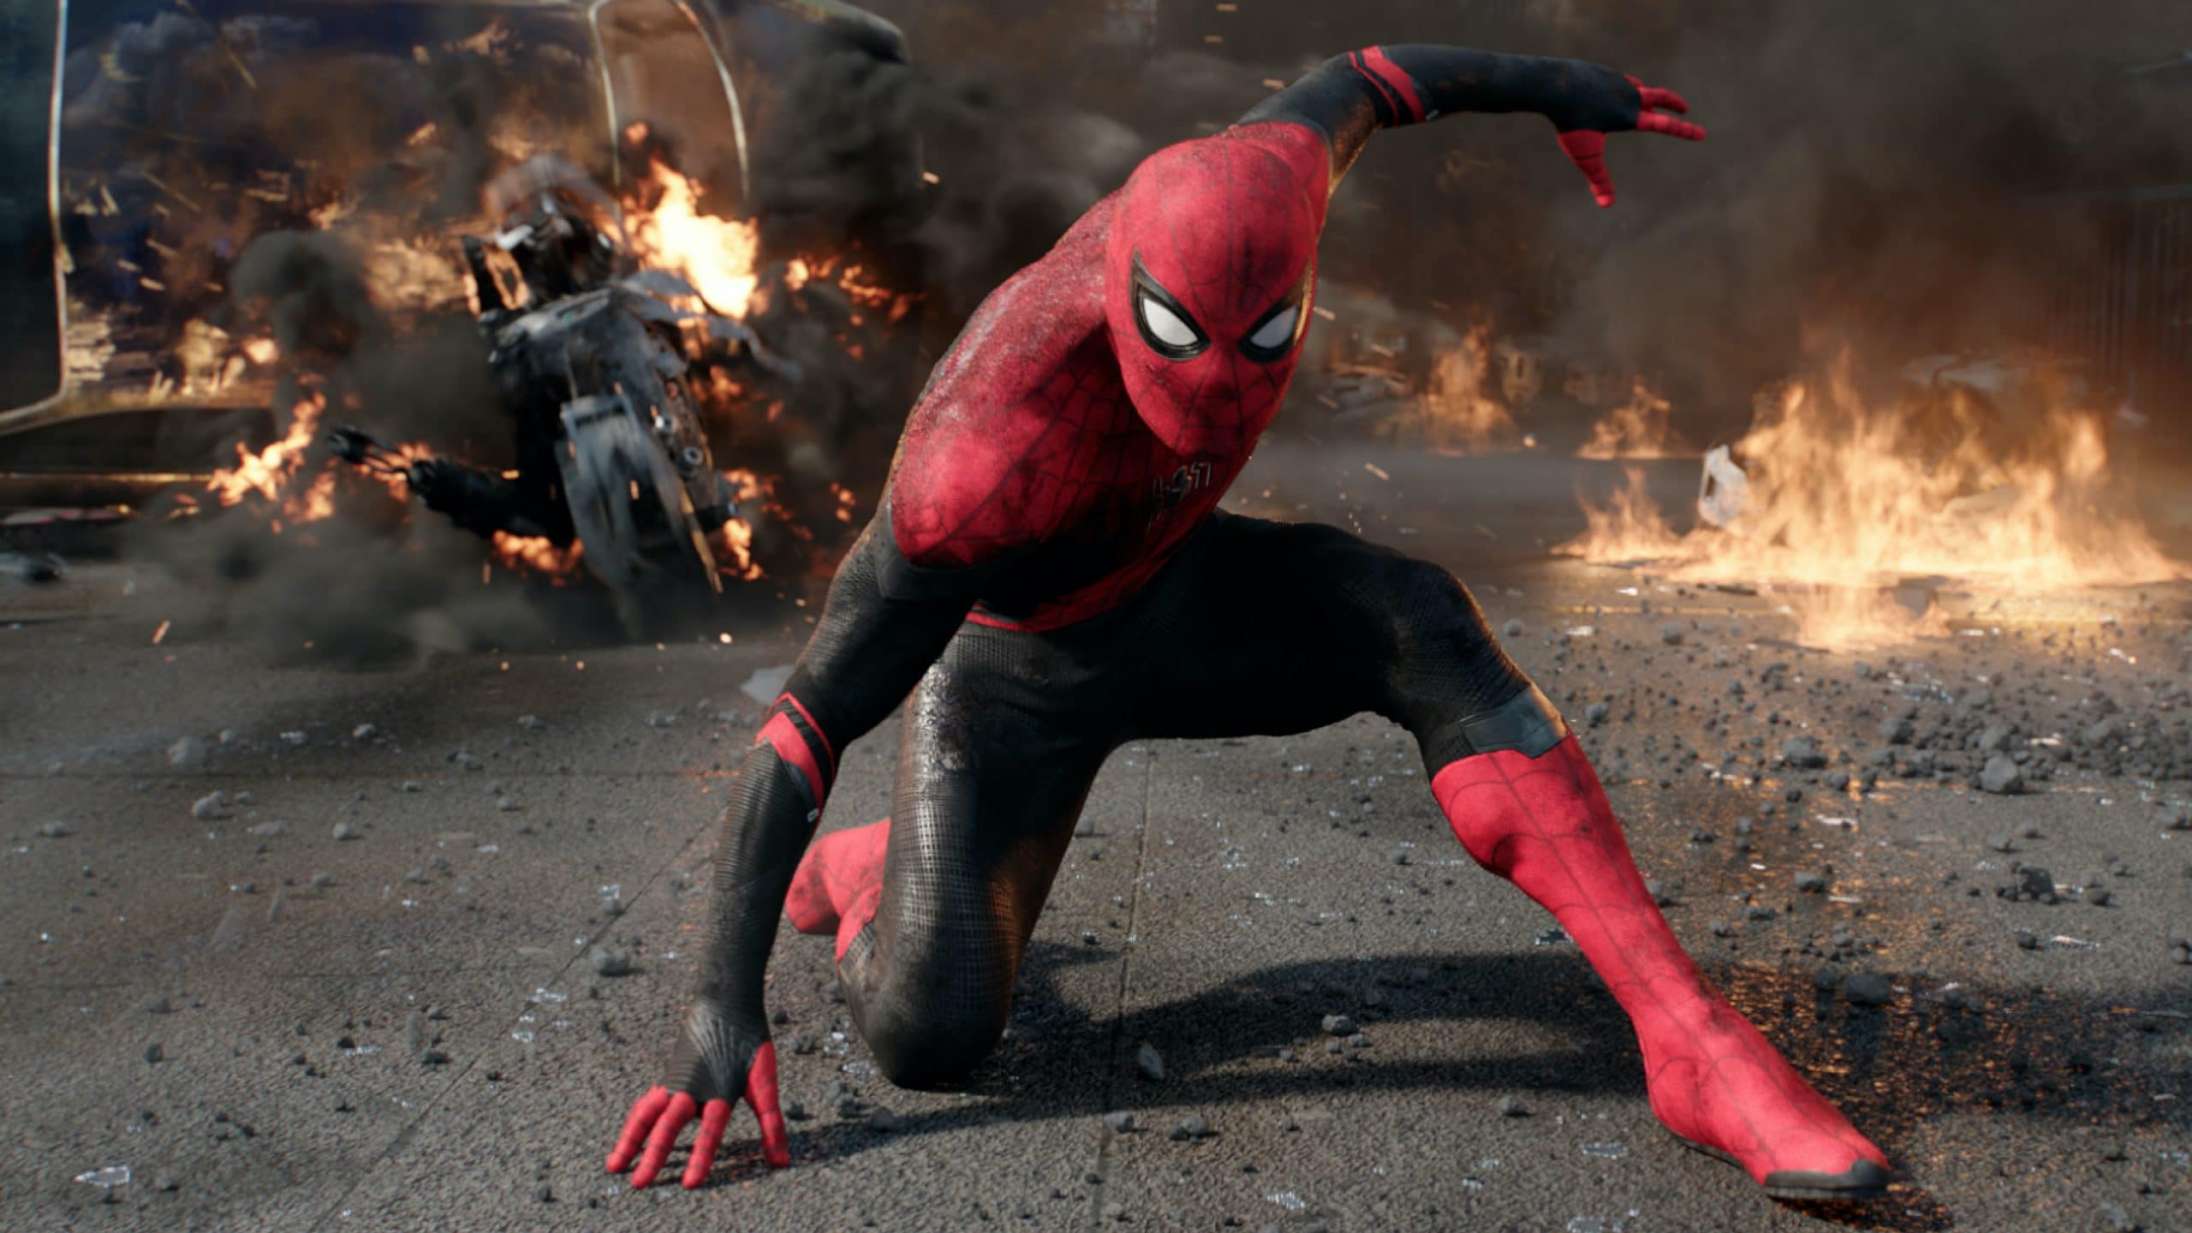 Spider-Man-fan ser ’No Way Home’ 292 gange i biografen